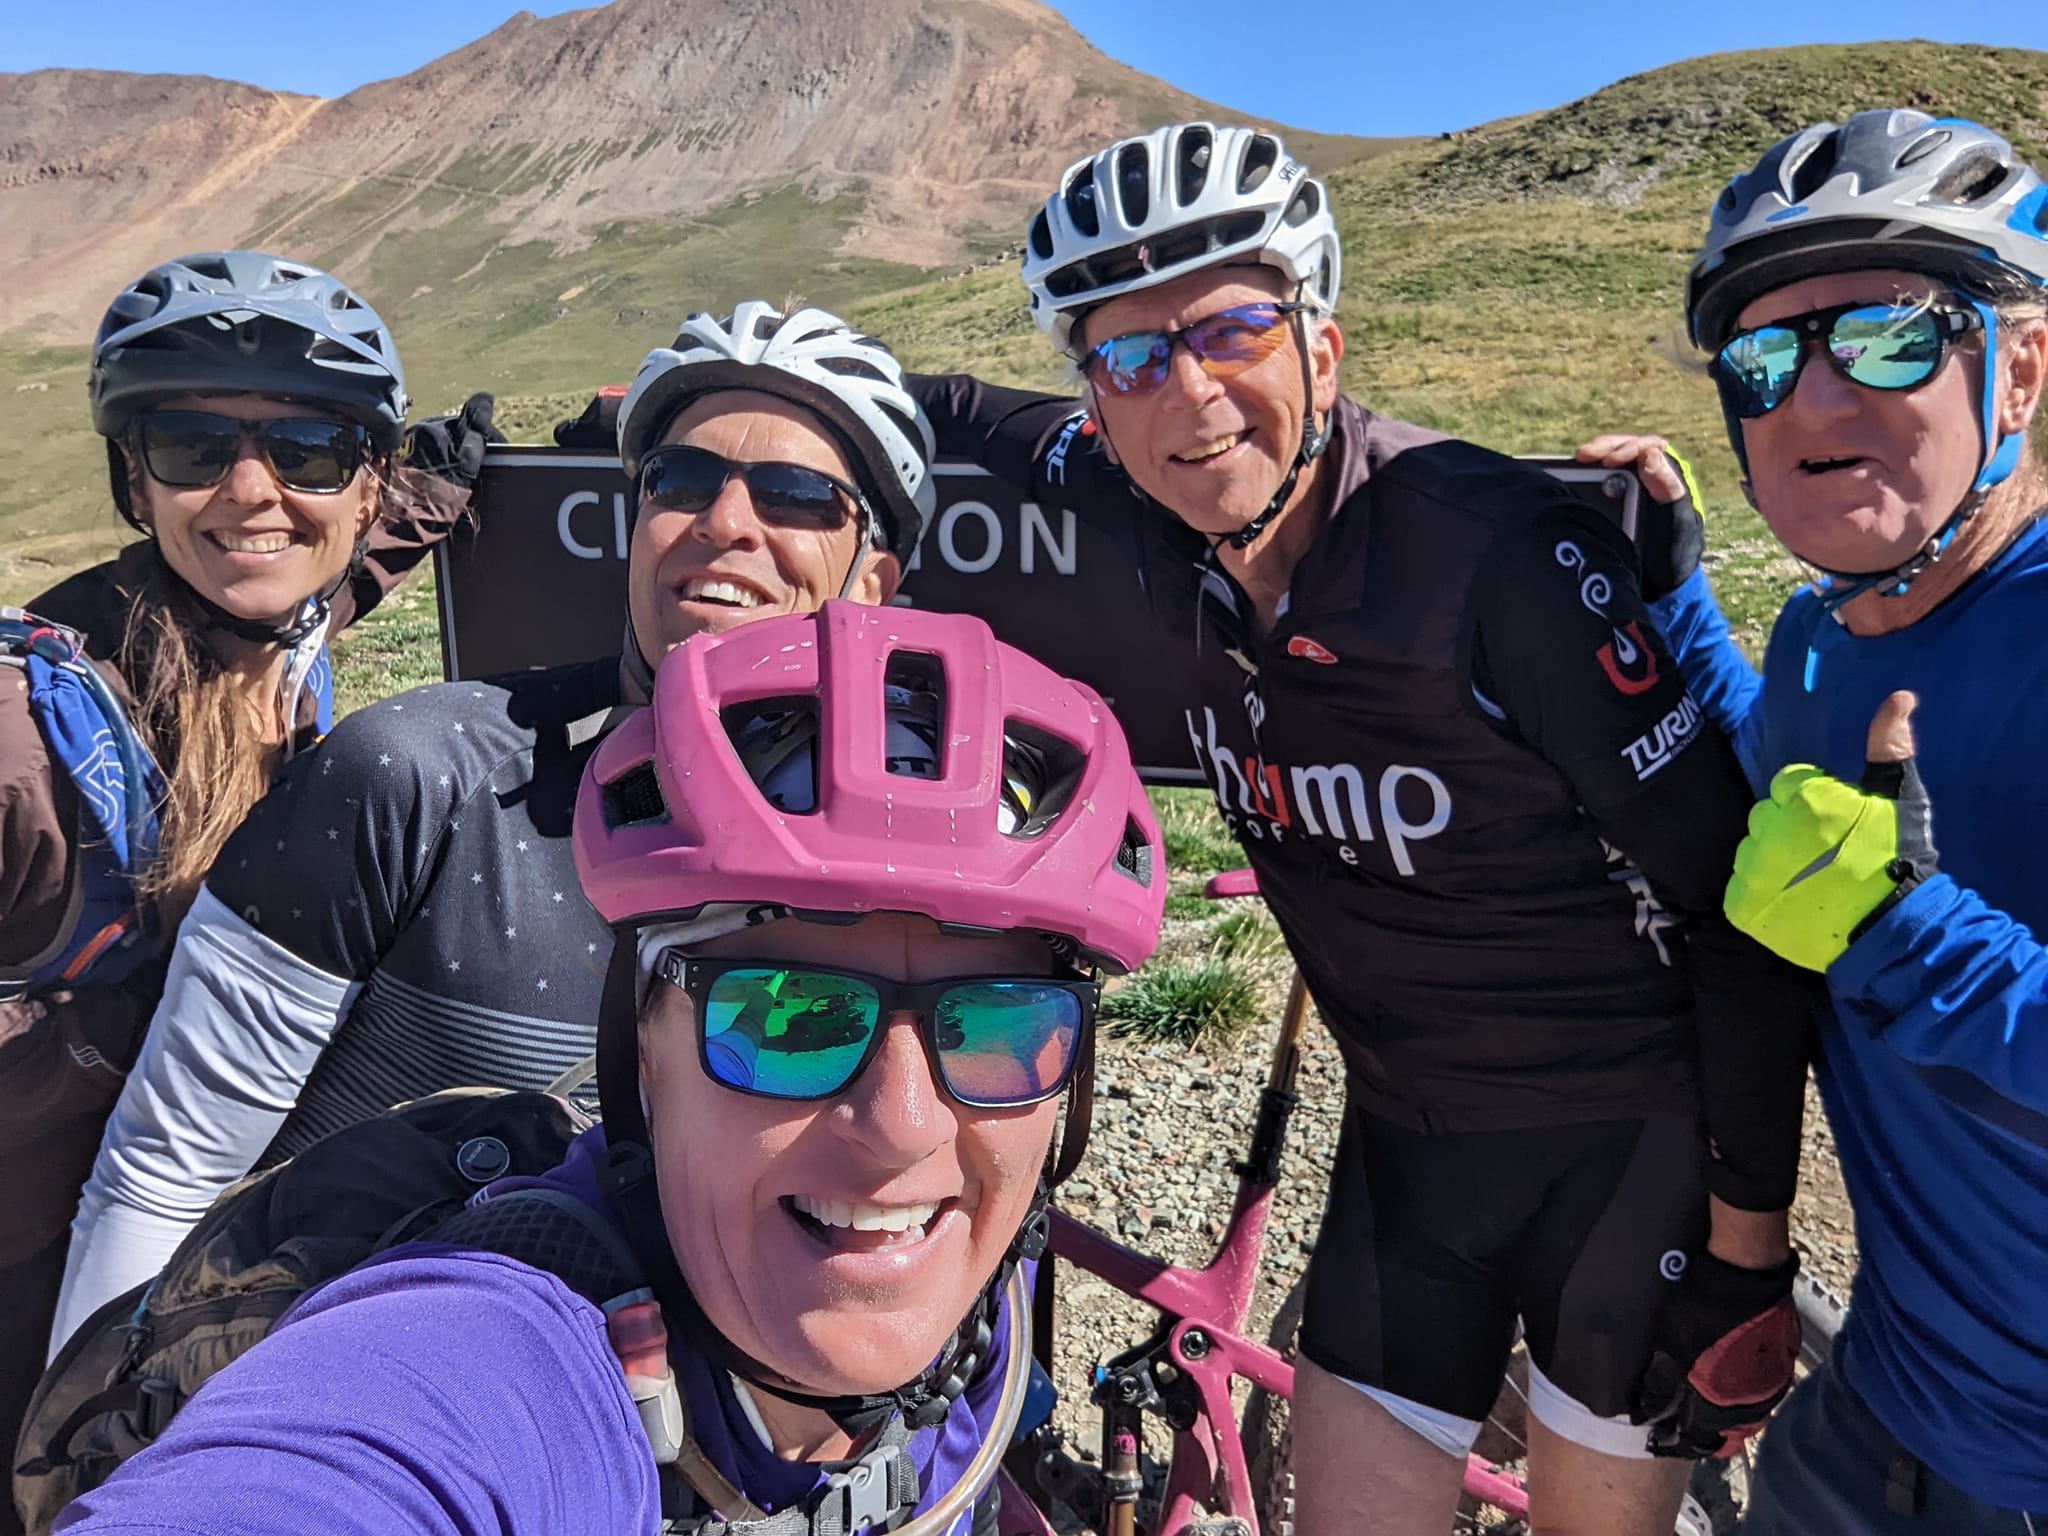 Laurel Darren (center) enjoys a mountain bike adventure with friends during her working summer vacation in Colorado.